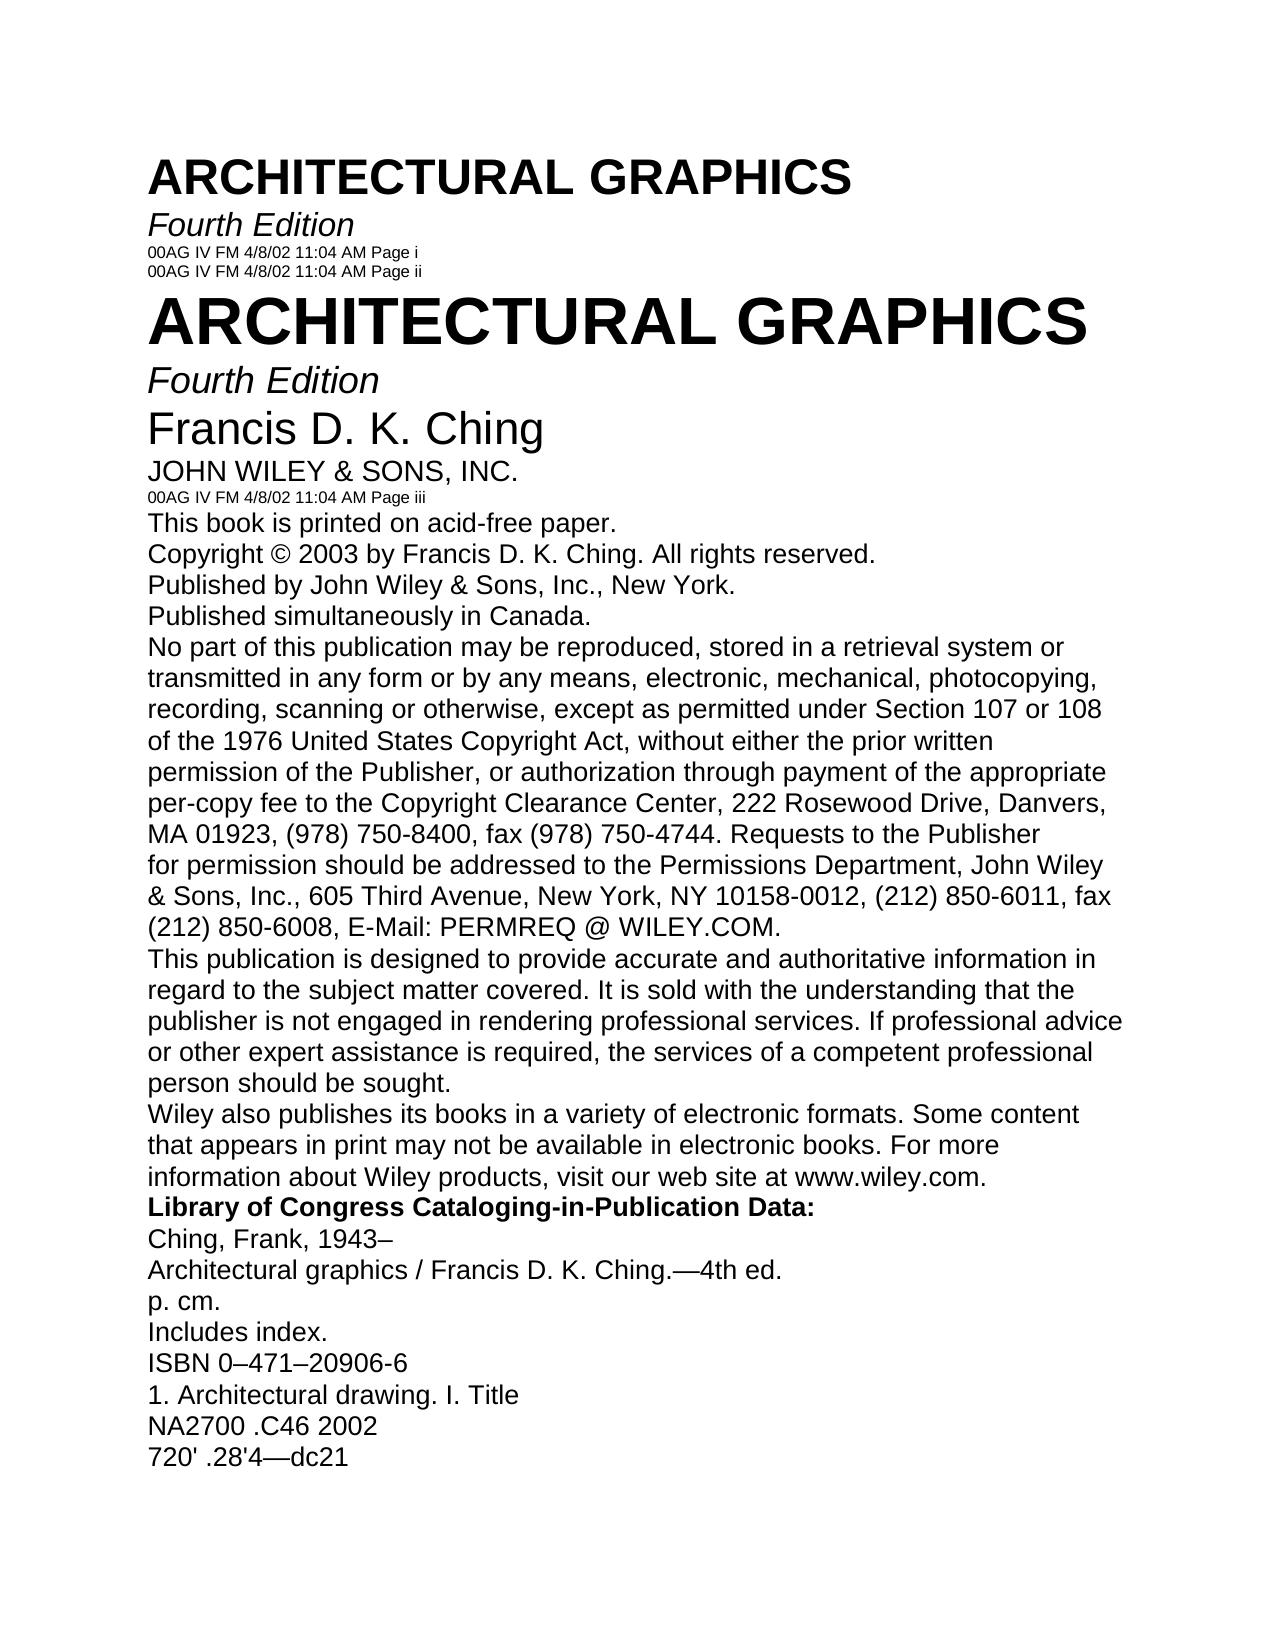 Architectural Graphics 2003